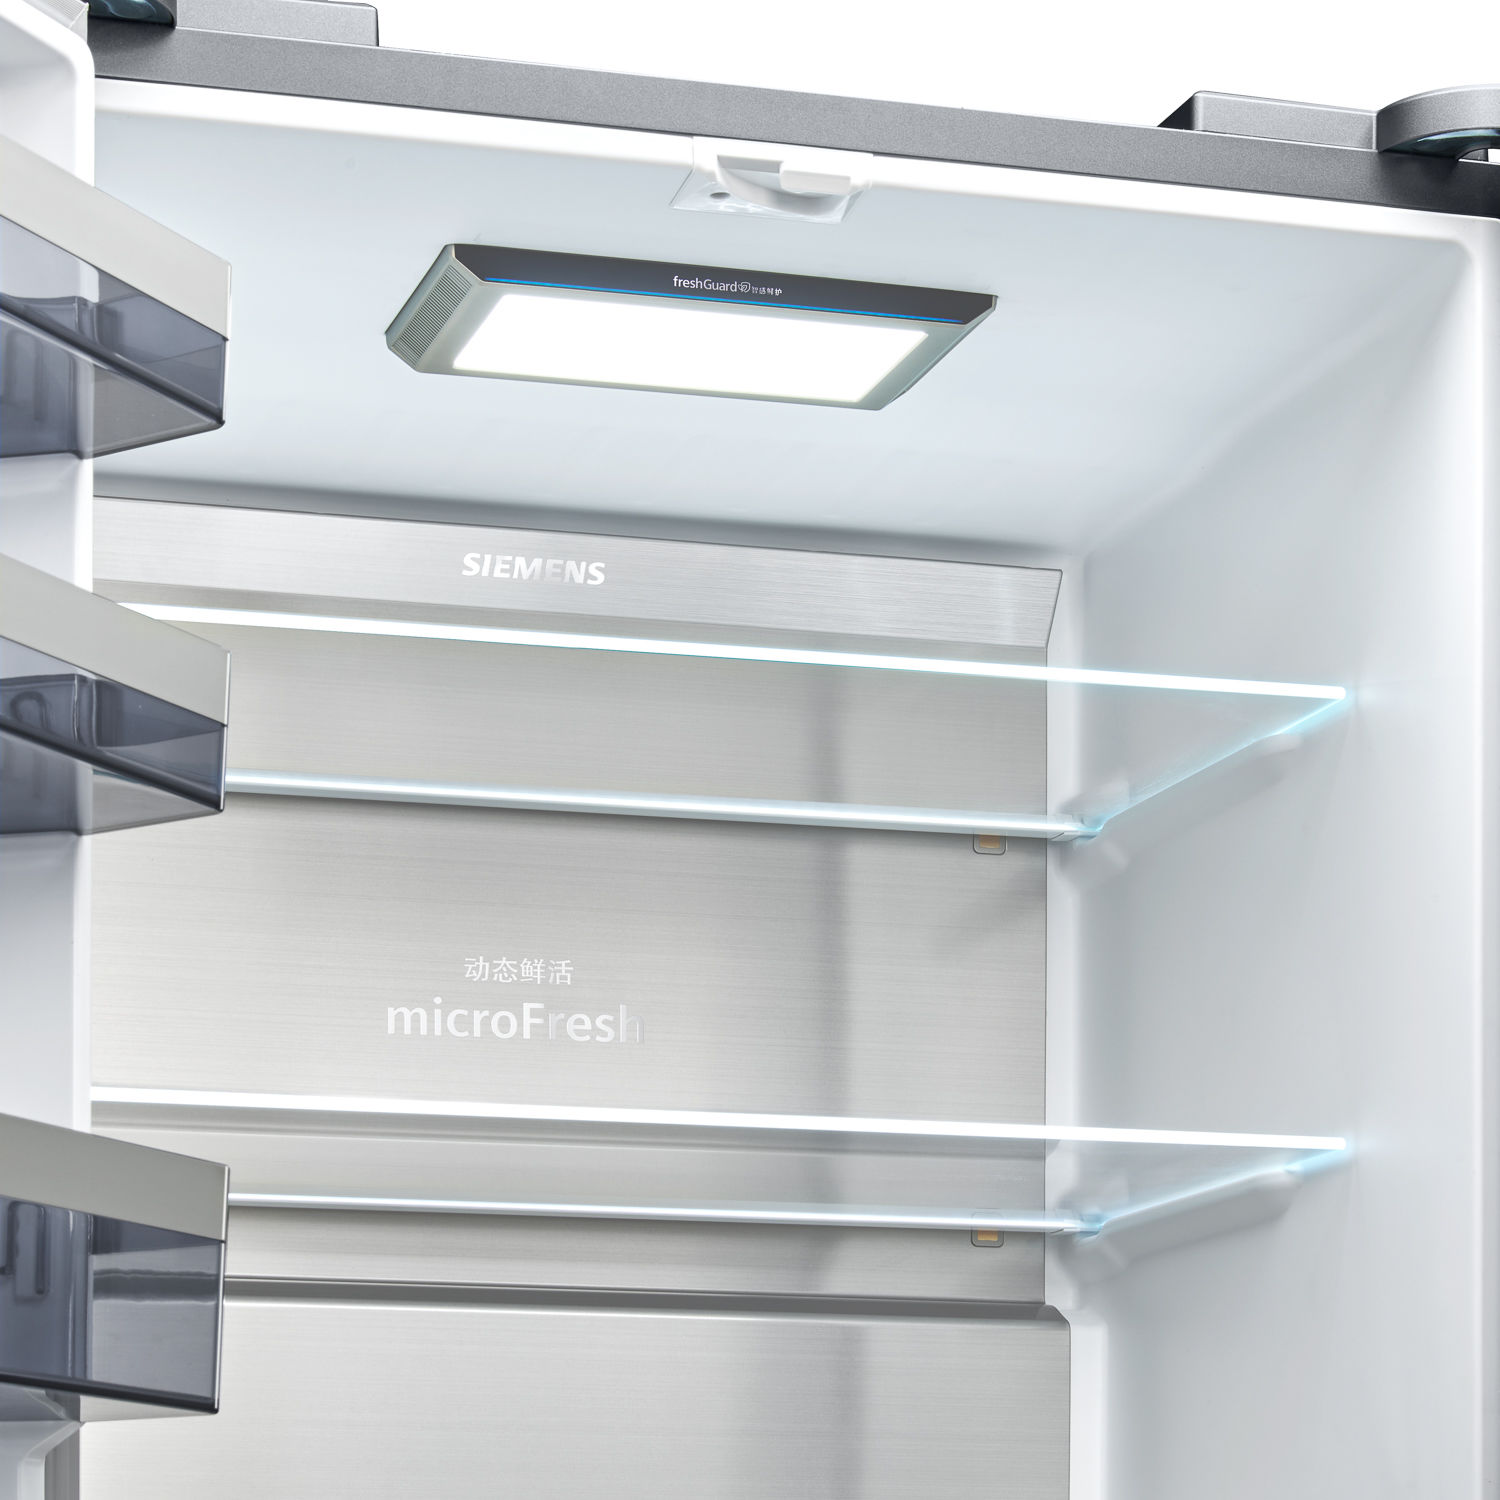 SIEMENS new Multi-door hygiene range fridge